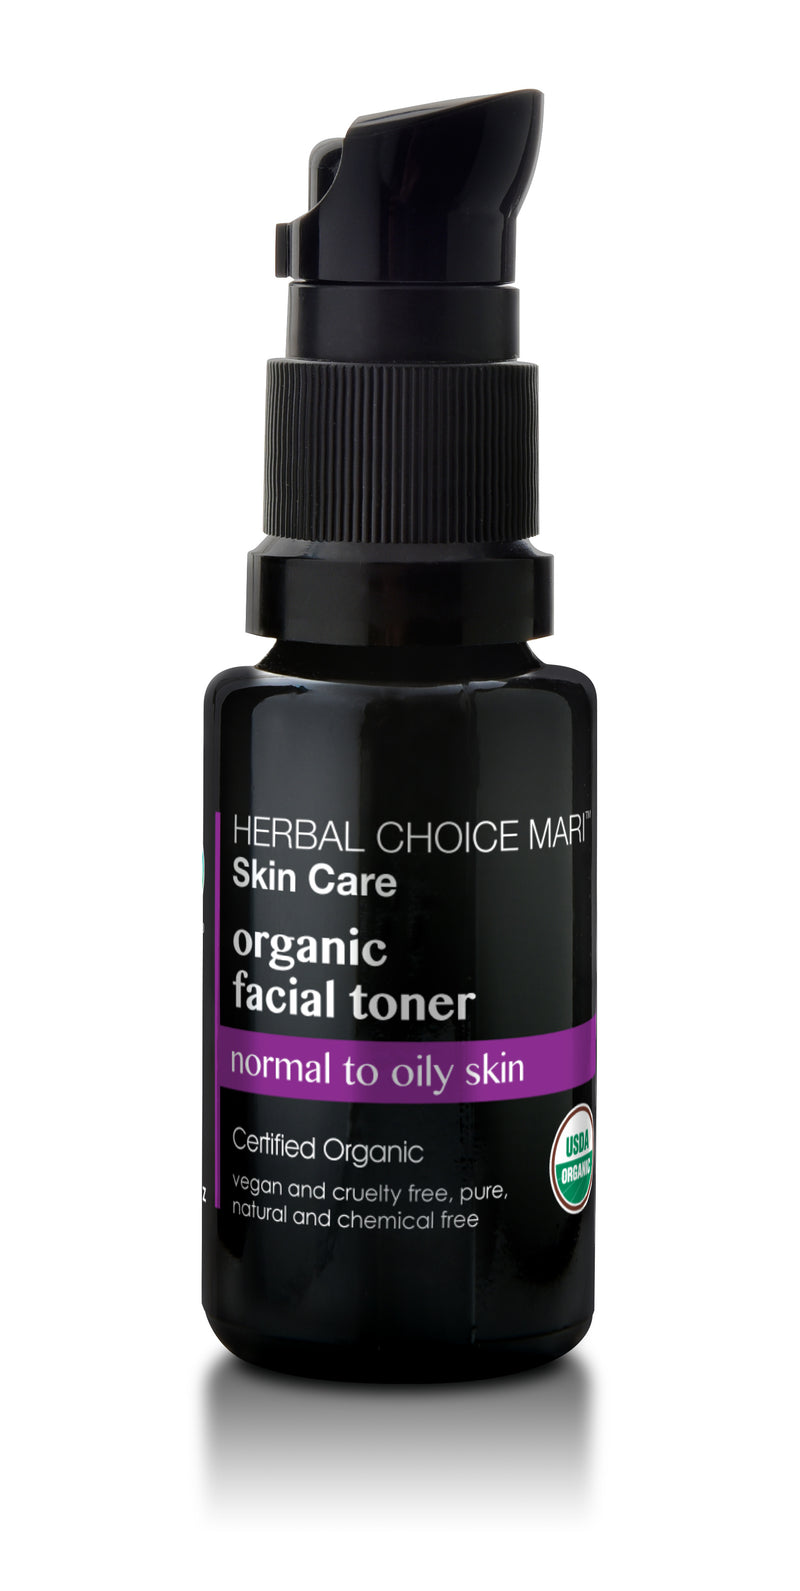 Herbal Choice Mari Organic Facial Toner,Normal to oily Skin - Herbal Choice Mari Organic Facial Toner,Normal to oily Skin - Herbal Choice Mari Organic Facial Toner,Normal to oily Skin